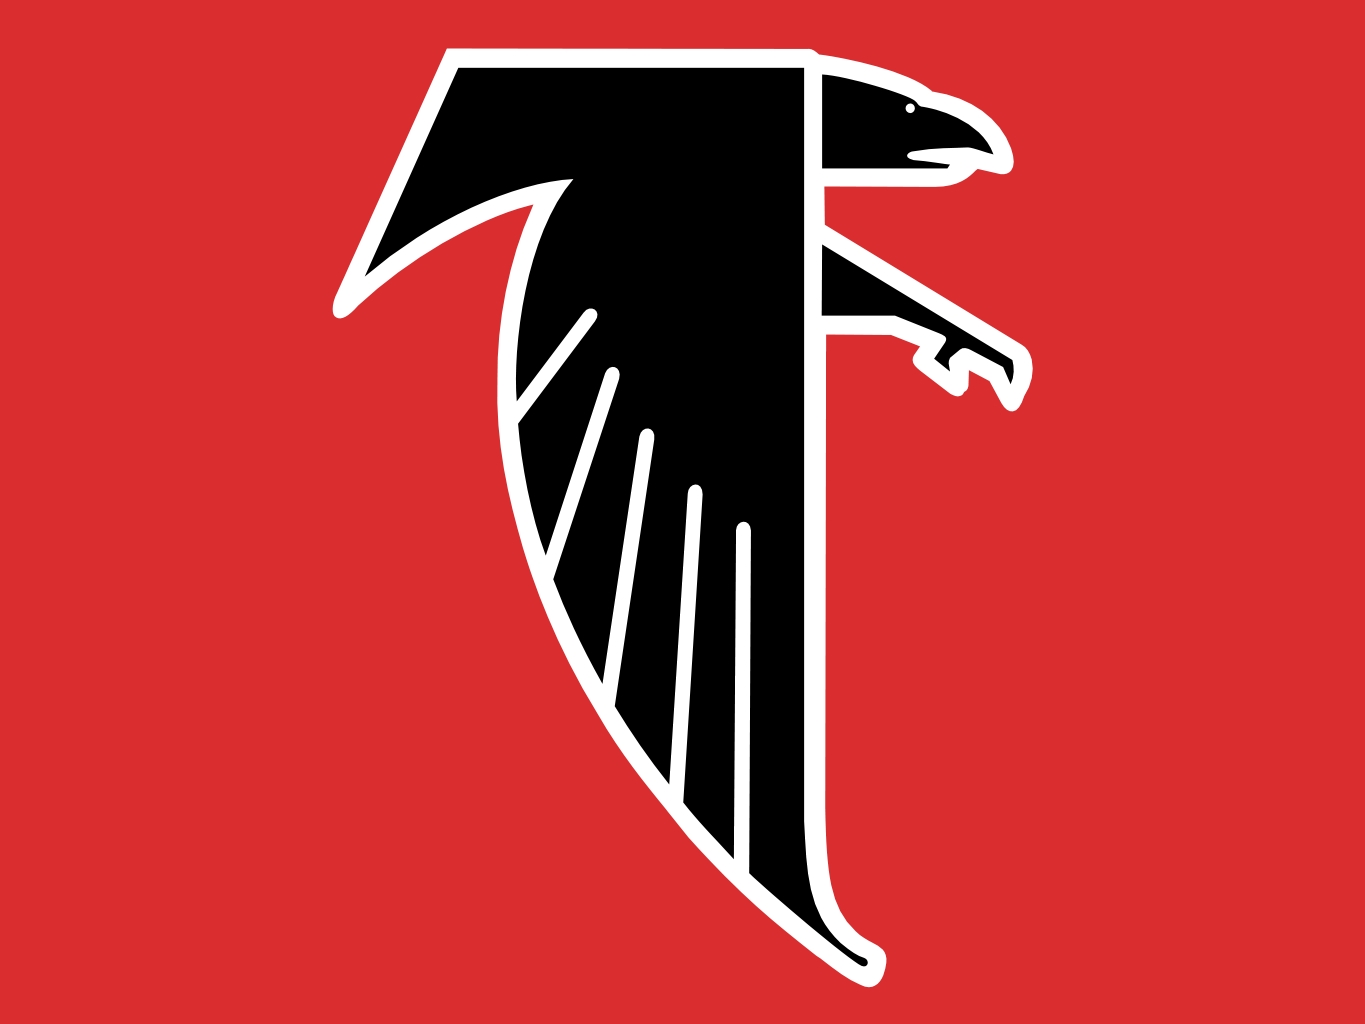 Falcon logo free.